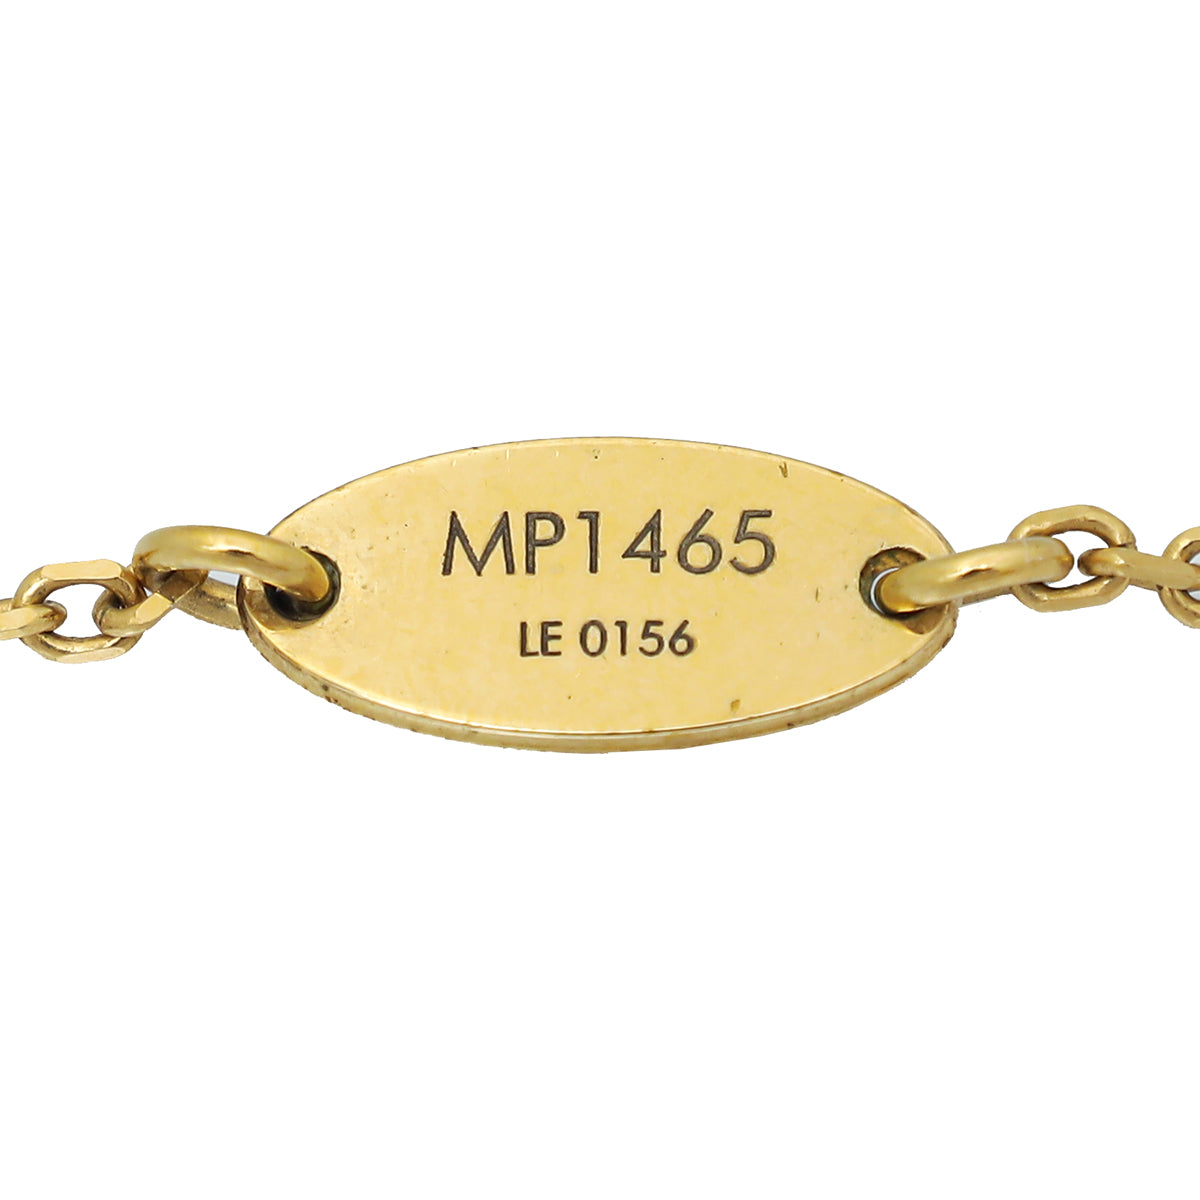 Louis Vuitton Gold Essential V Necklace – The Closet